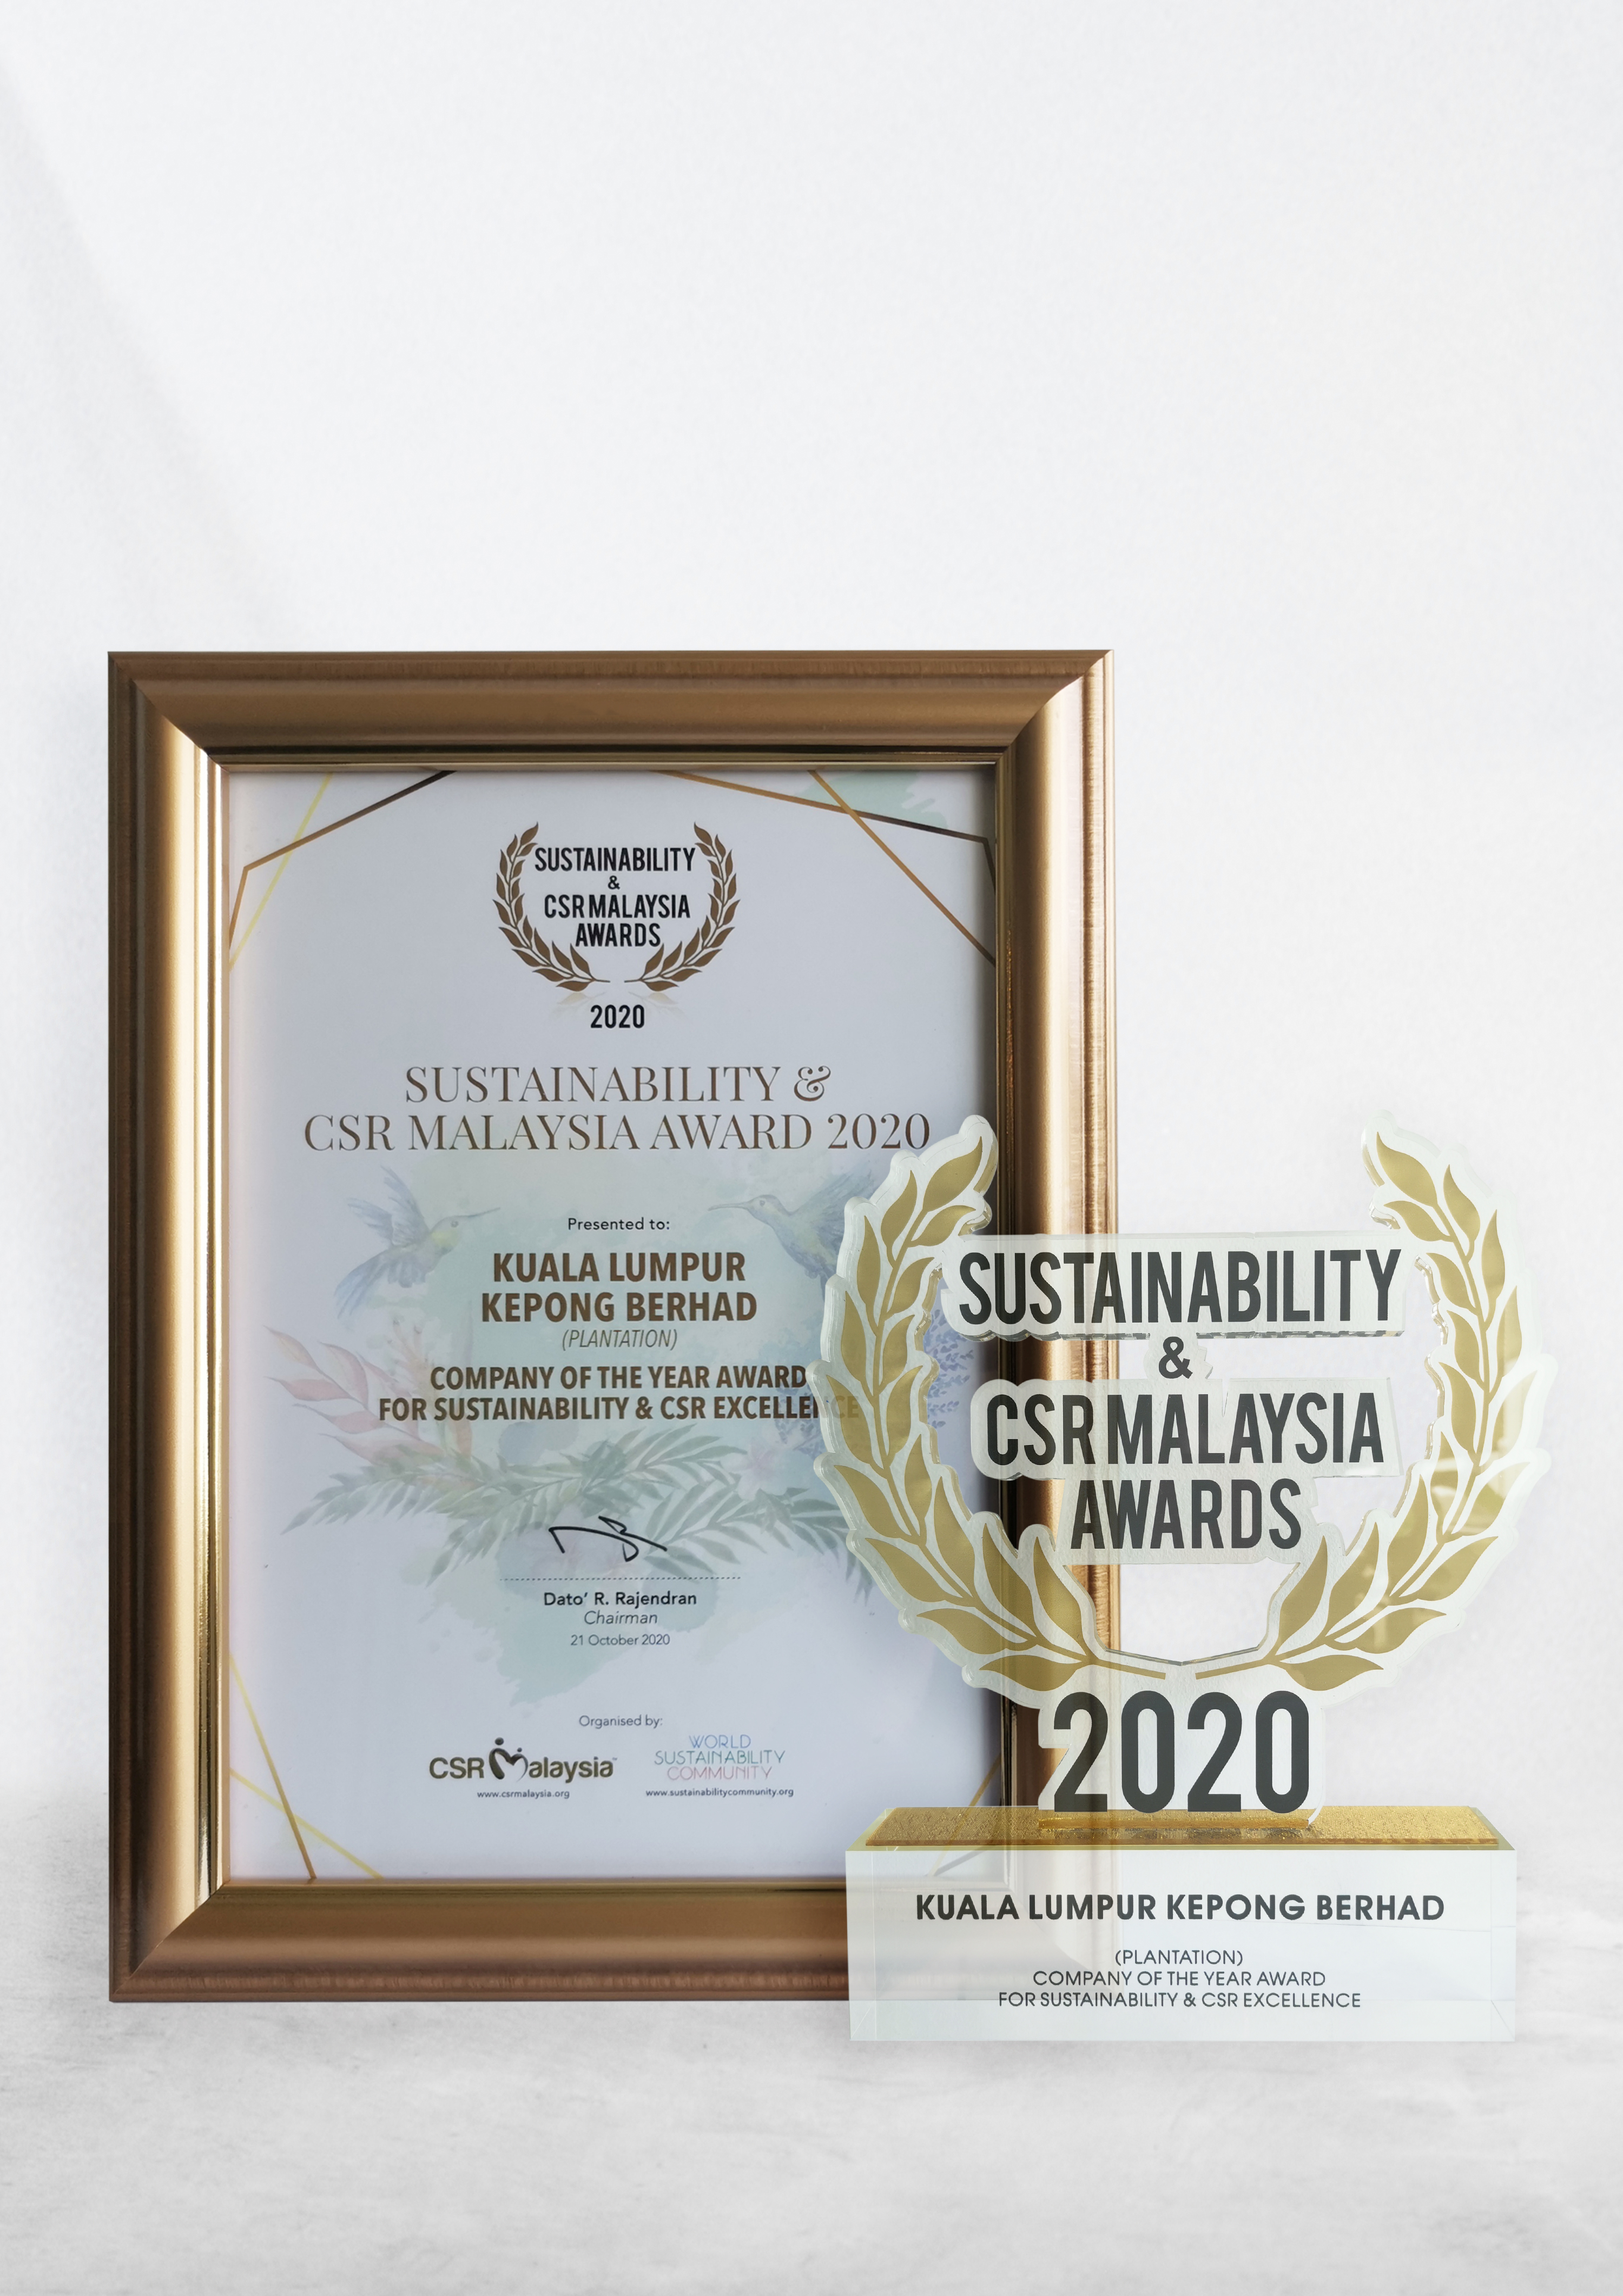 Klk Receives Company Of The Year Award For Sustainability Csr Excellence Plantation Kuala Lumpur Kepong Berhad Klk Malaysia